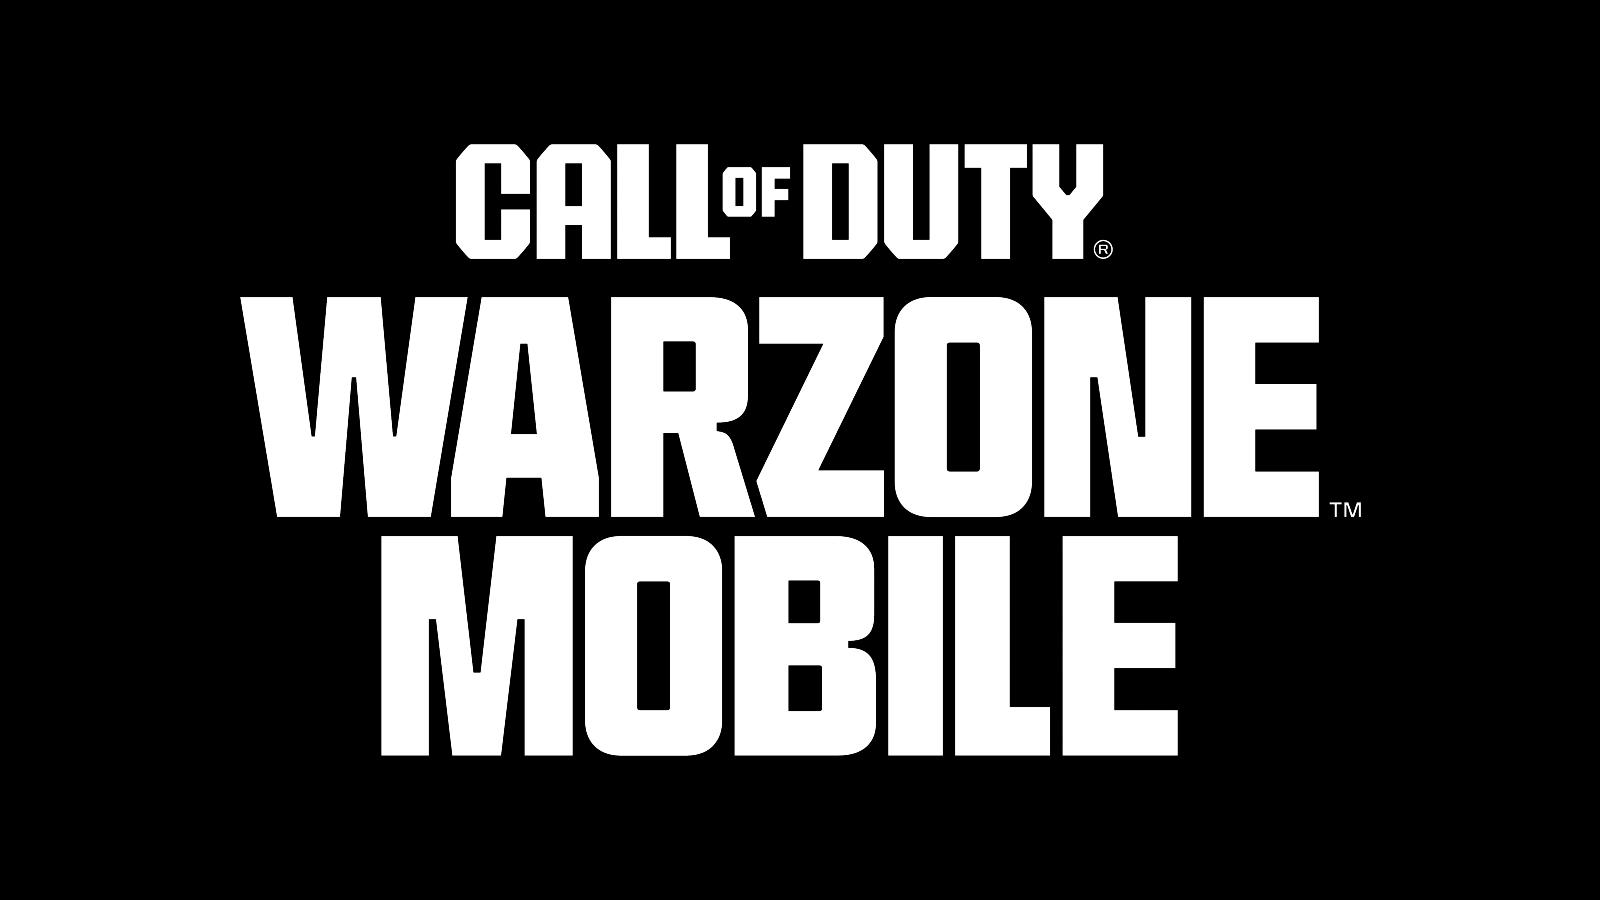 warzone mobile logo on black background